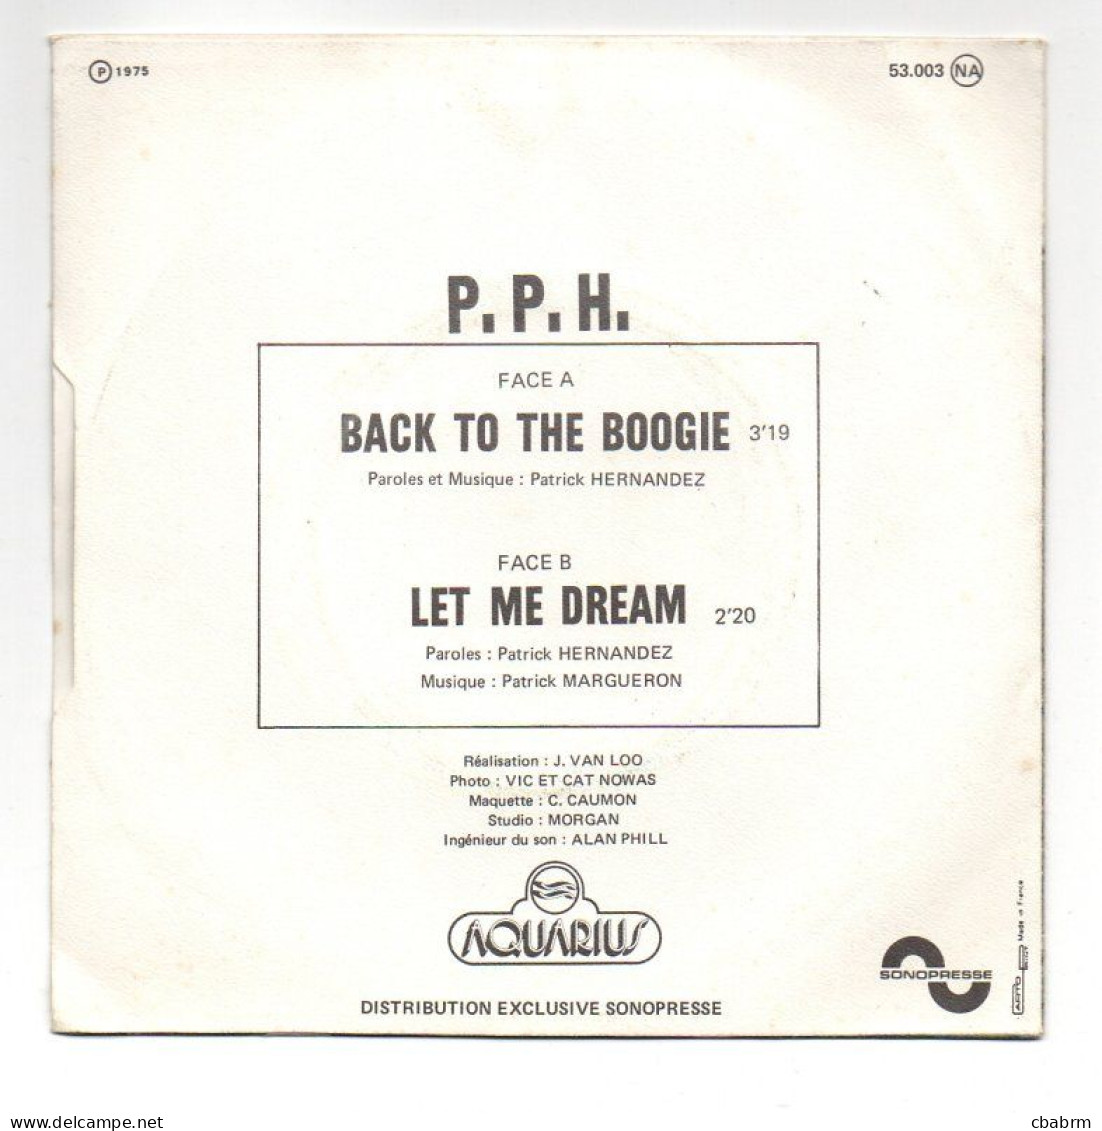 SP 45 TOURS PPH ( P.P.H. ) PATRICK HERNANDEZ BACK TO THE BOOGIE 1975 FRANCE - Rock